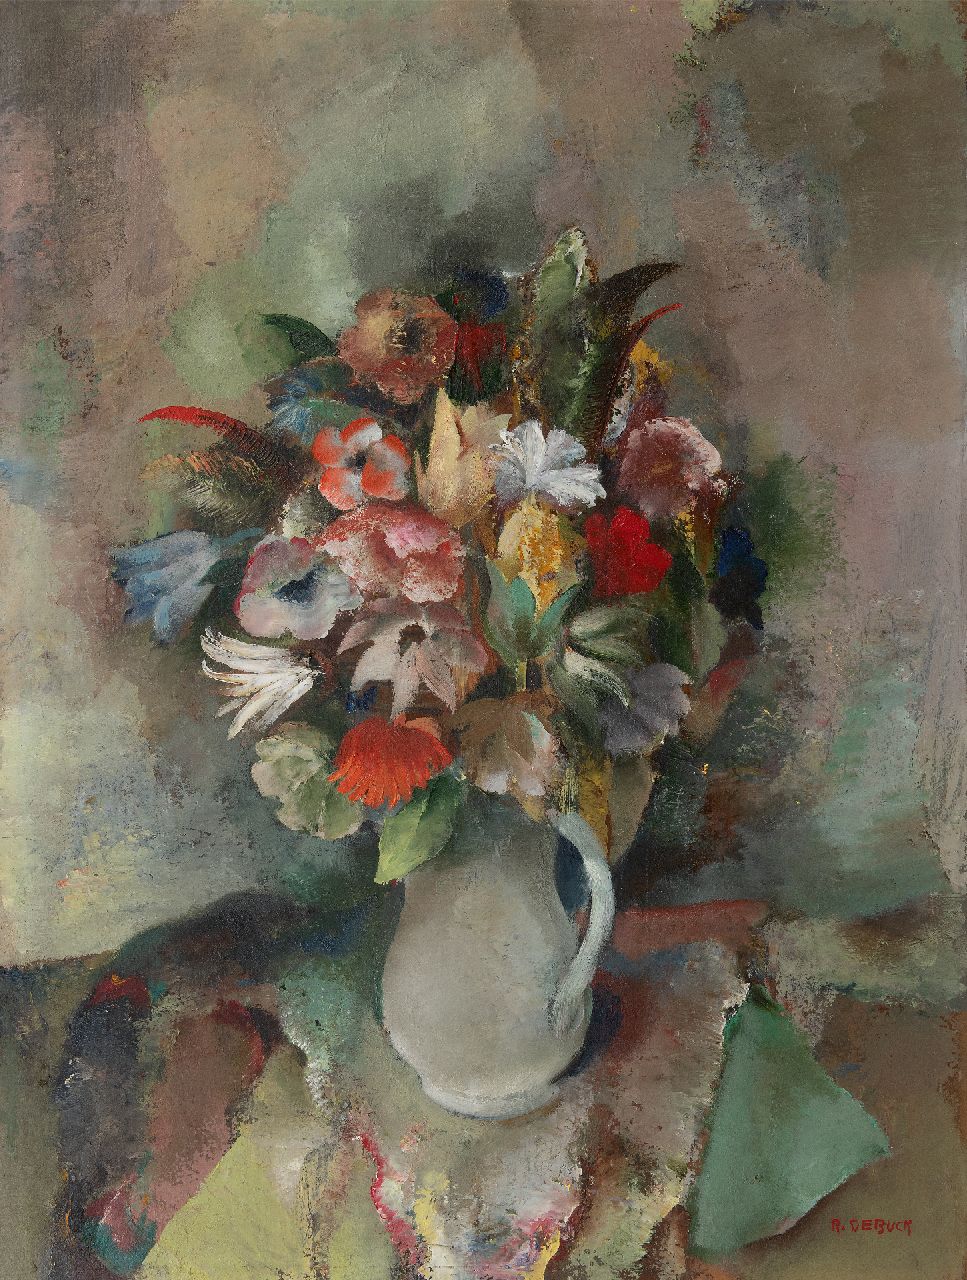 Buck R. de | Raphaël de Buck | Paintings offered for sale | Flowers in a white vase, oil on board 84.0 x 63.2 cm, signed l.r.